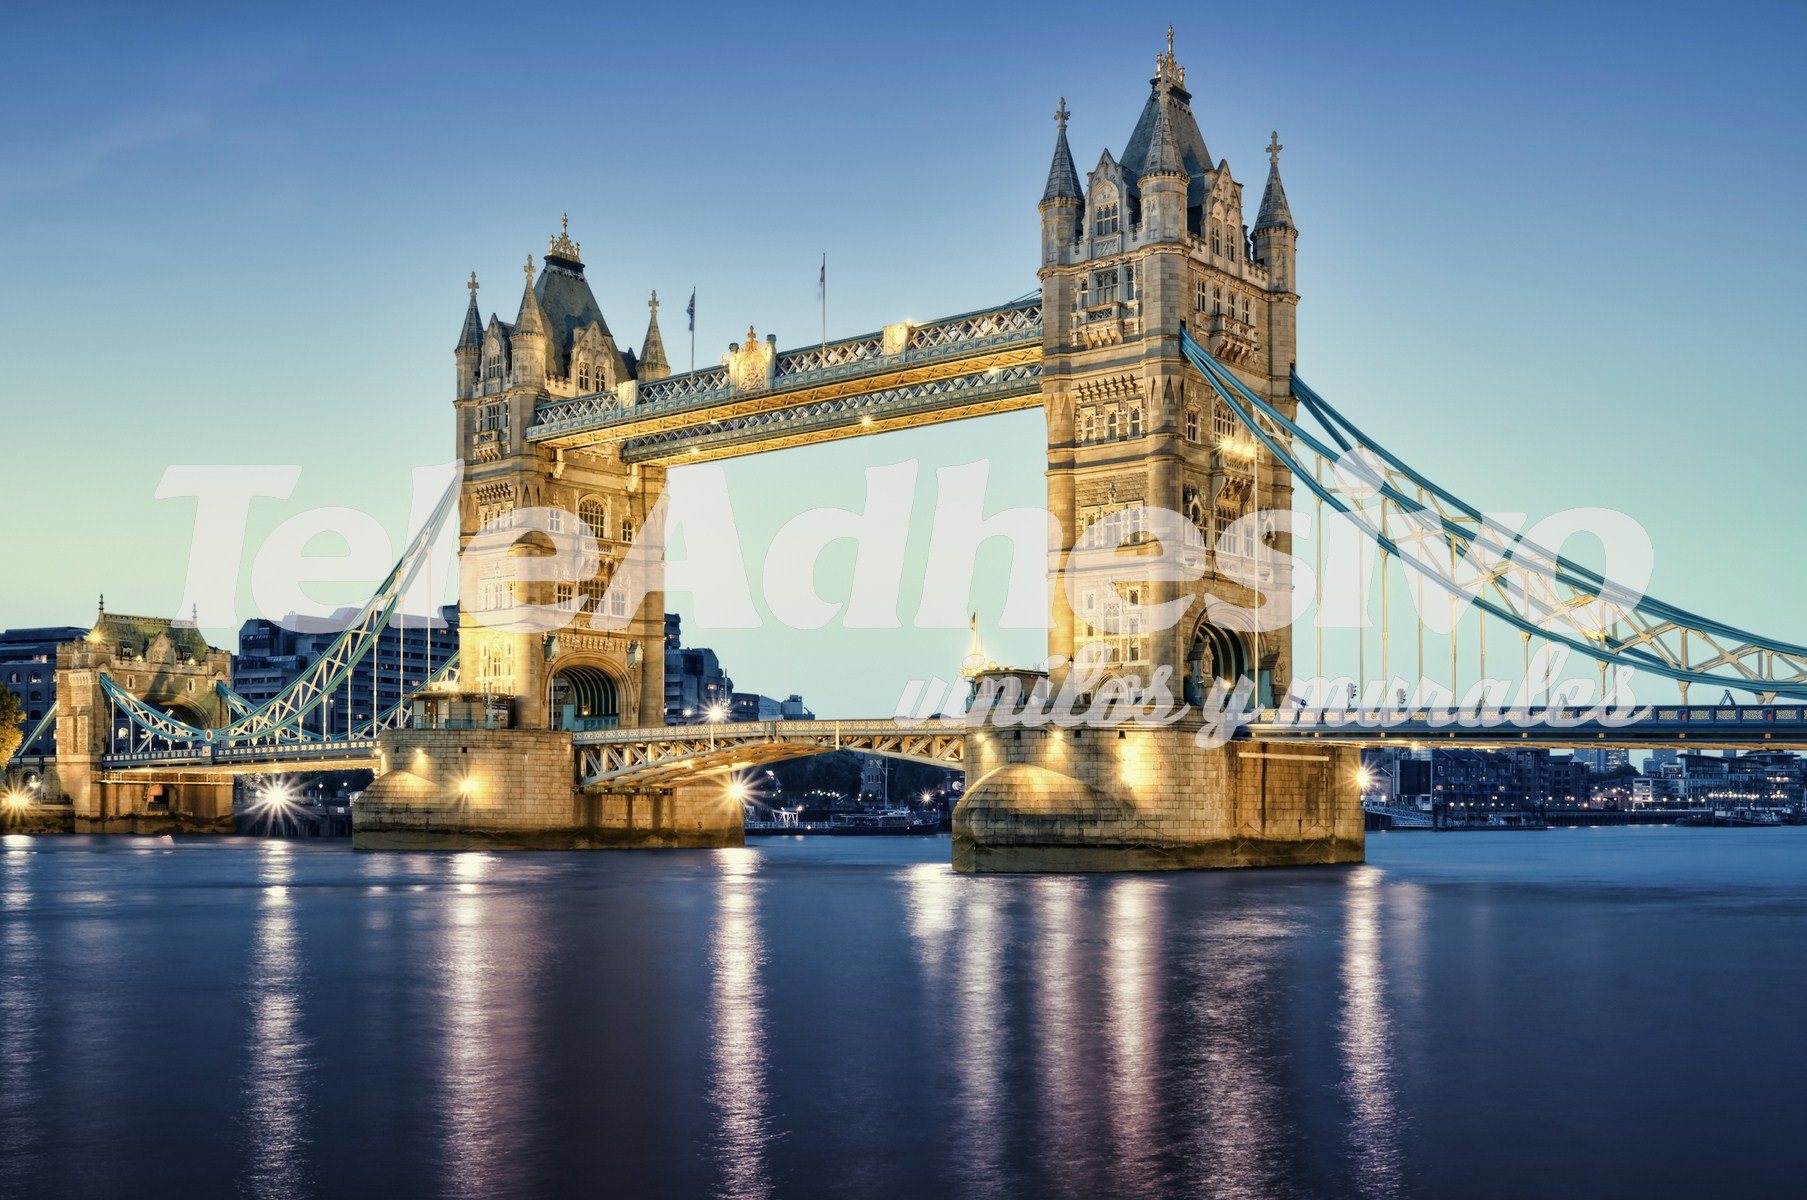 Fotomurales: Puente de la Torre de Londres